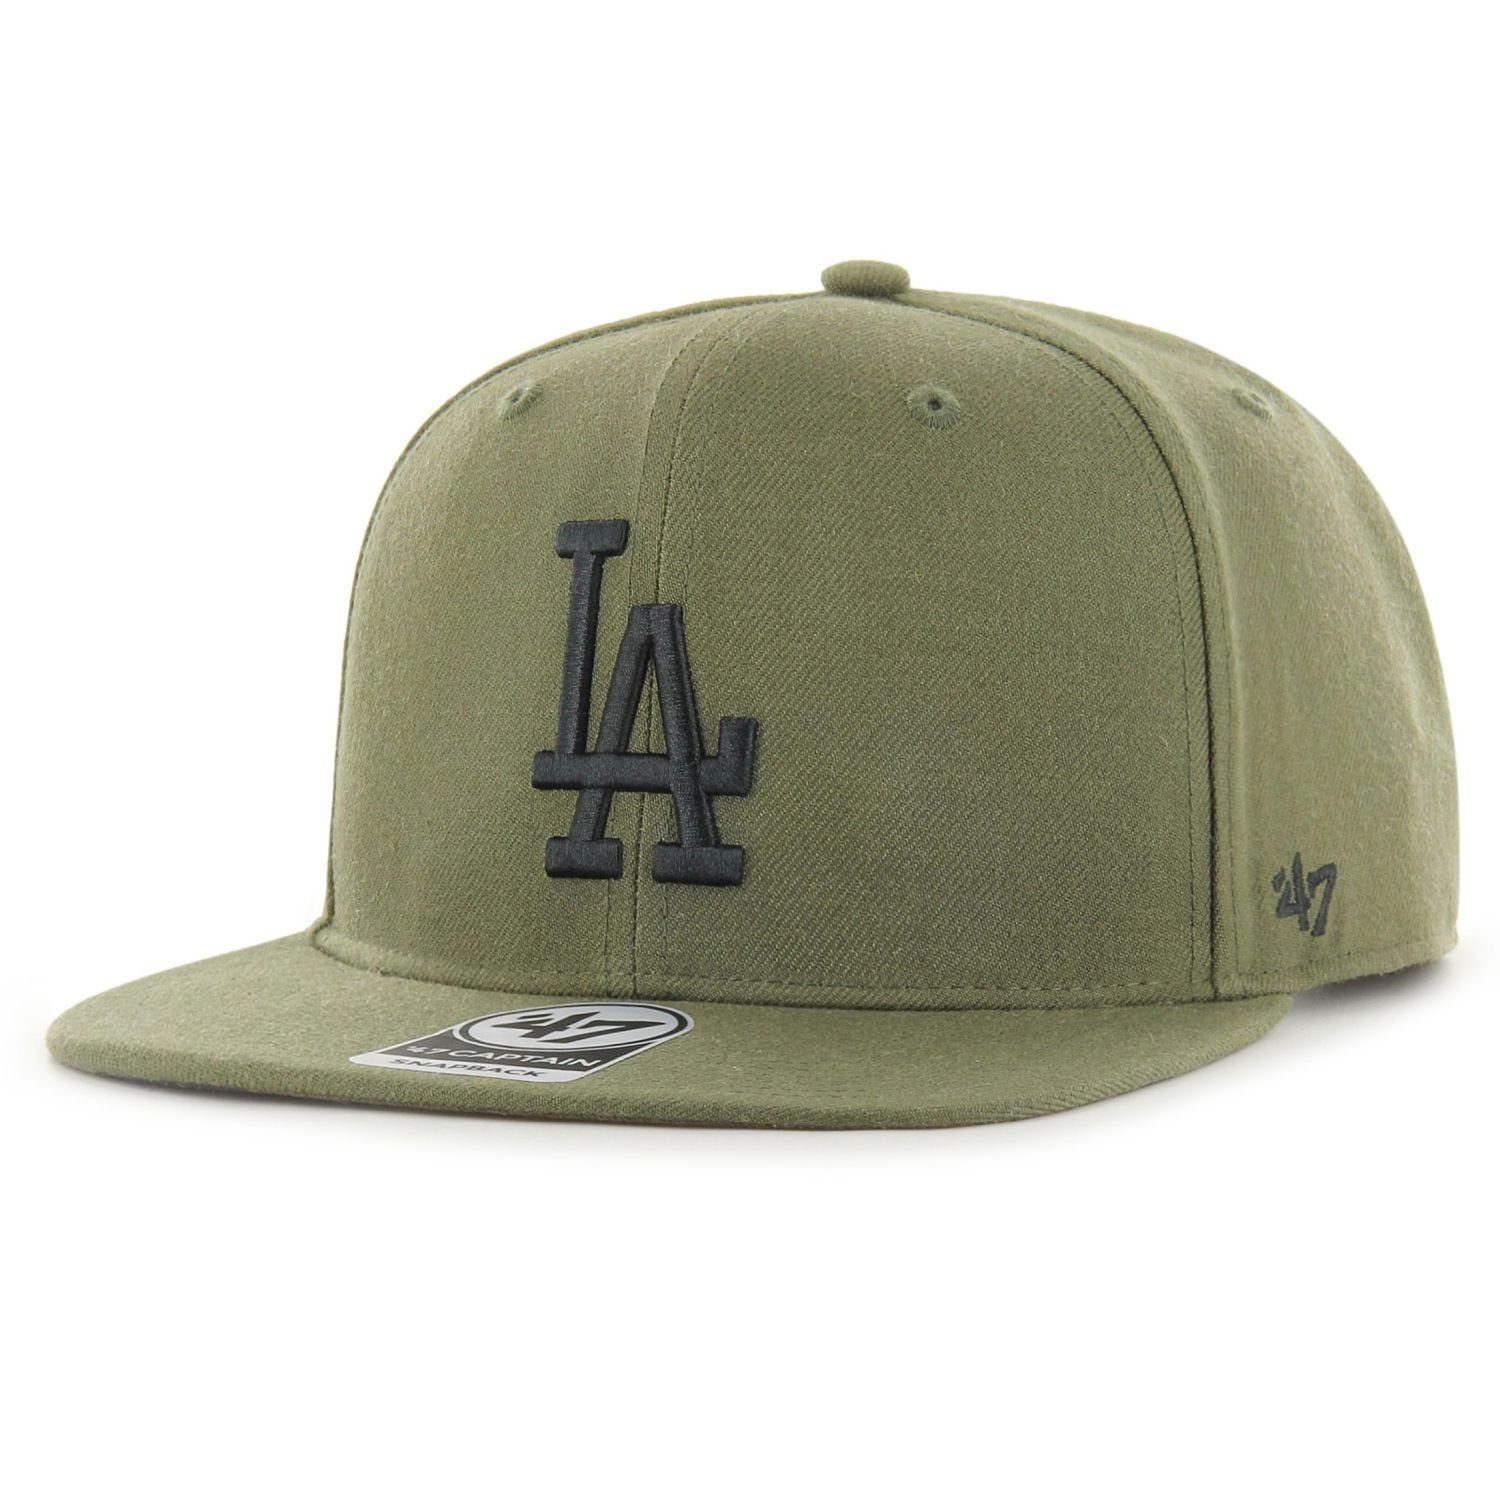 '47 Brand Snapback Cap CAPTAIN Los Angeles Dodgers